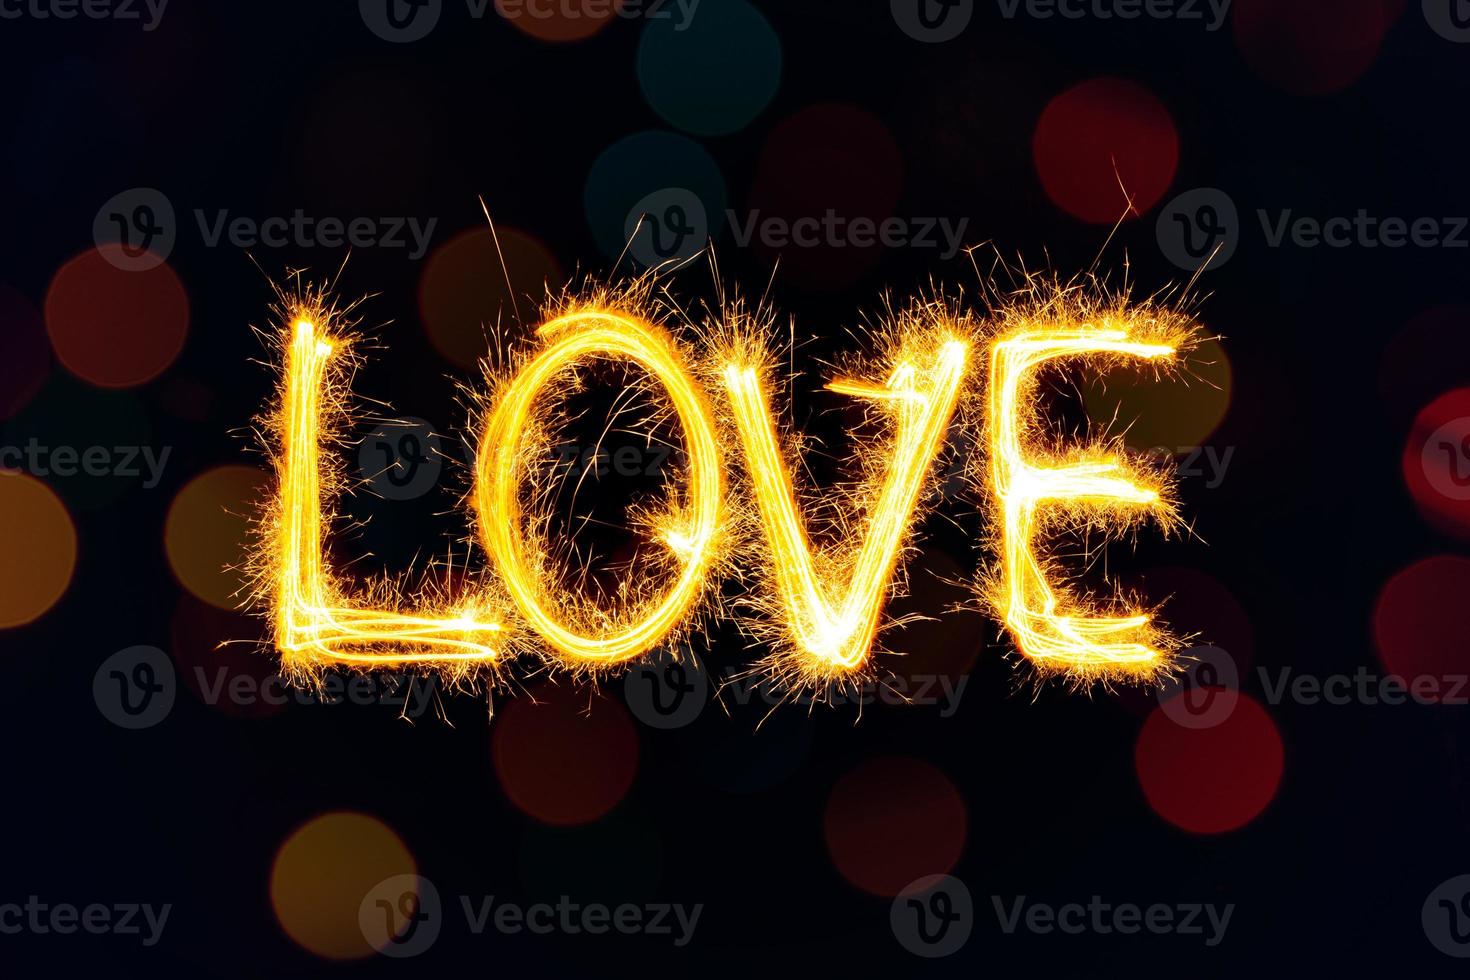 Valentines Day - Love made a sparkler on black photo